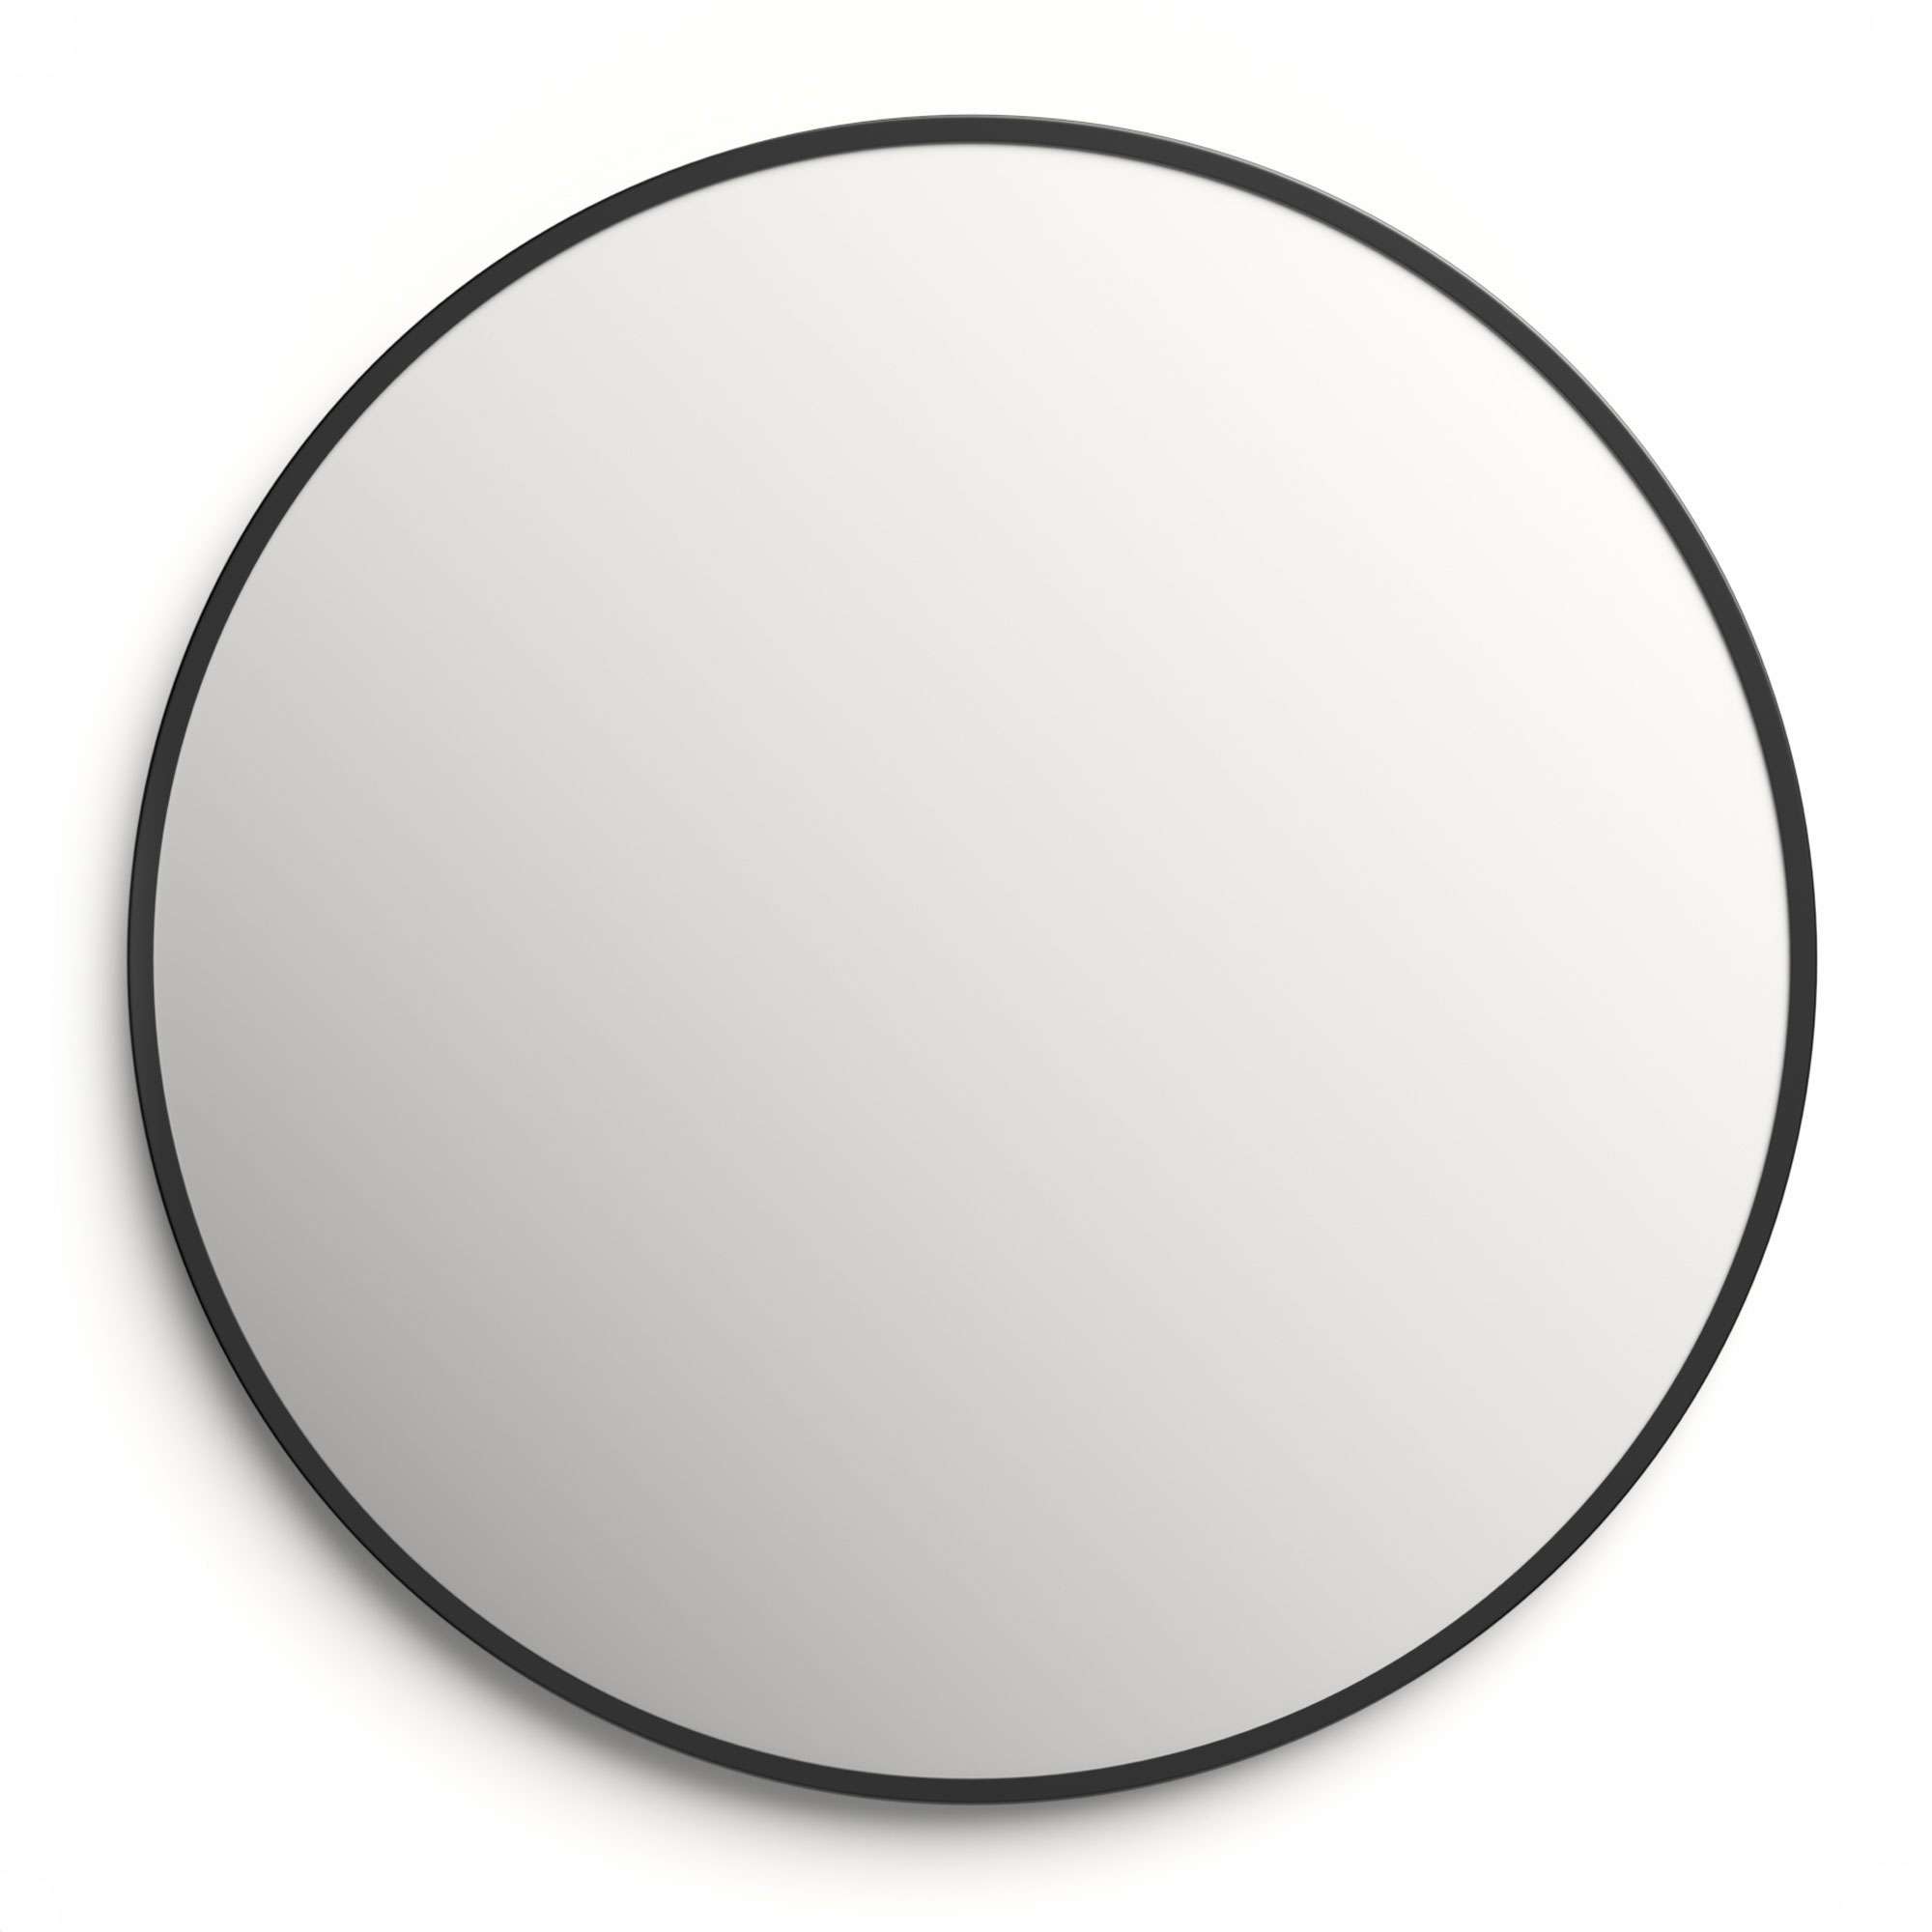 Barnyard Designs 24 inch Black Round Mirror, Modern Bathroom Mirrors for Wall, Farmhouse Mirror, Metal Framed Round Mirror, Circle Mirrors for Wall, Bathroom Vanity Mirror, Wall Mirrors Home Decor - image 1 of 7